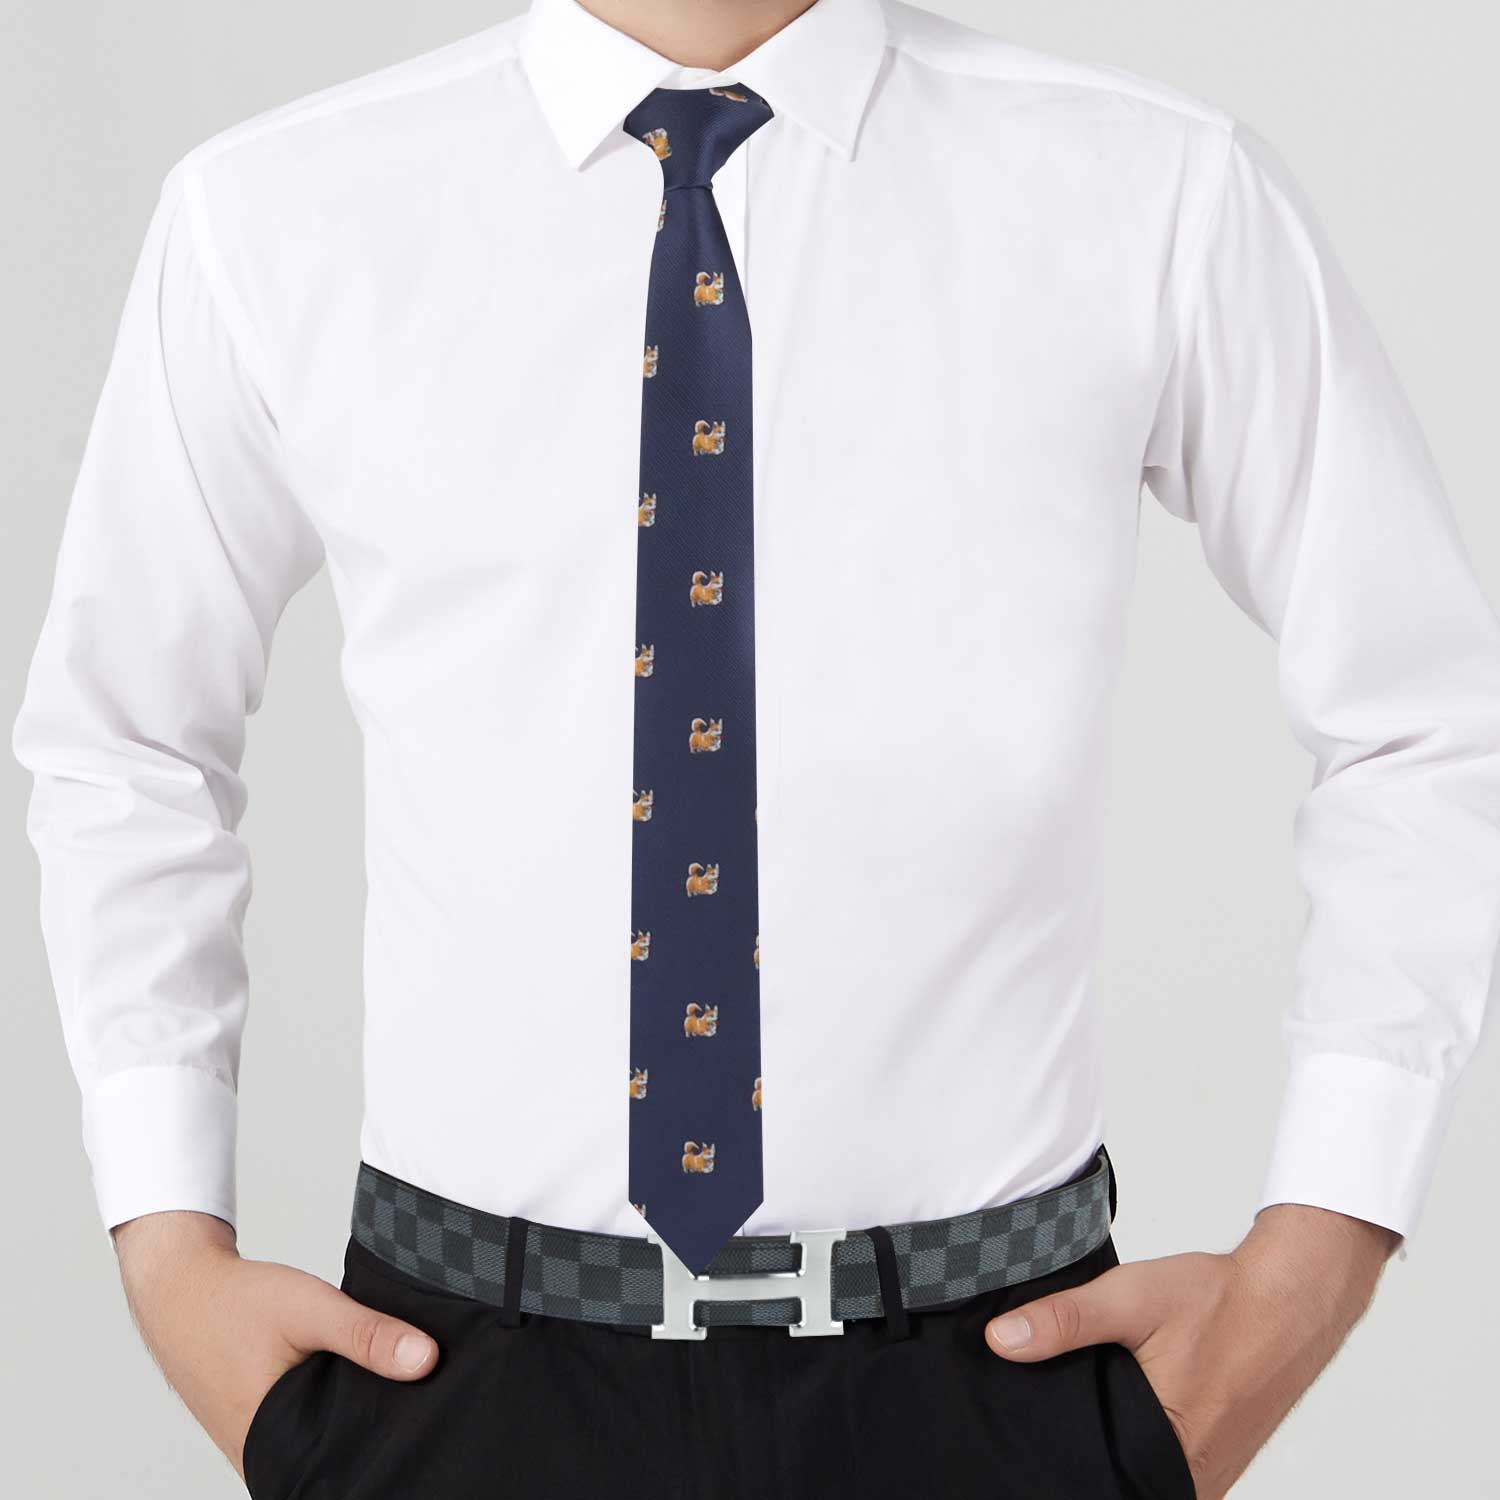 A man wearing a Corgi Dog Skinny Tie and a white shirt exuding charm.